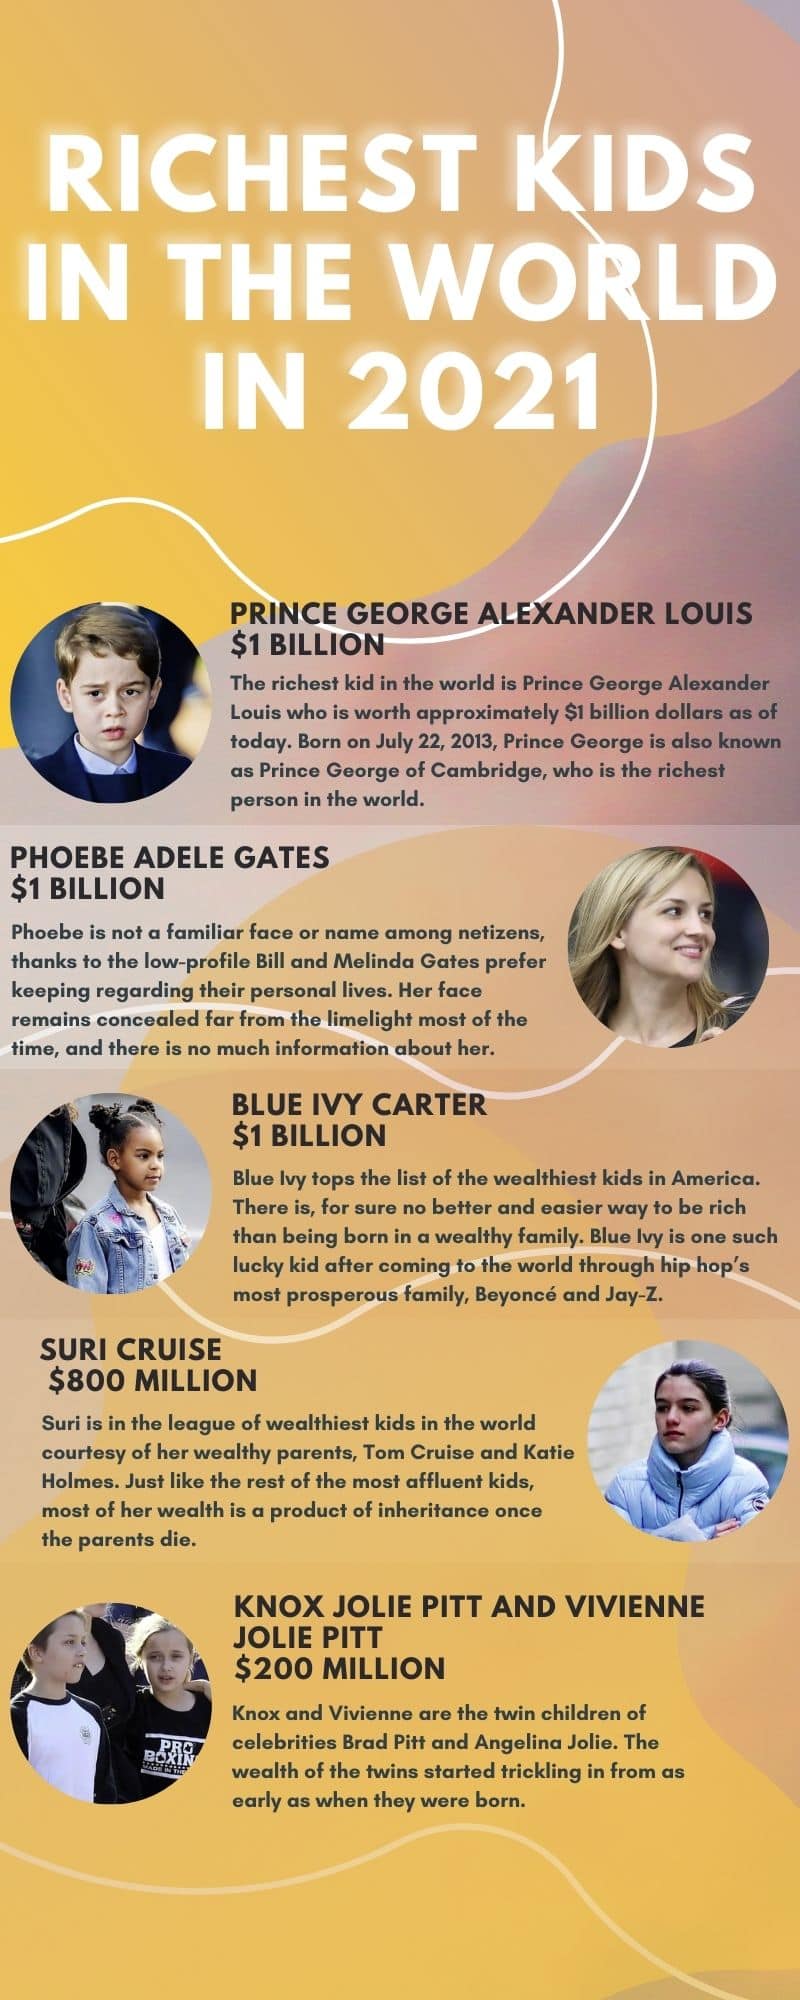 15 richest kids in the world in 2021 and their net worth Tuko.co.ke